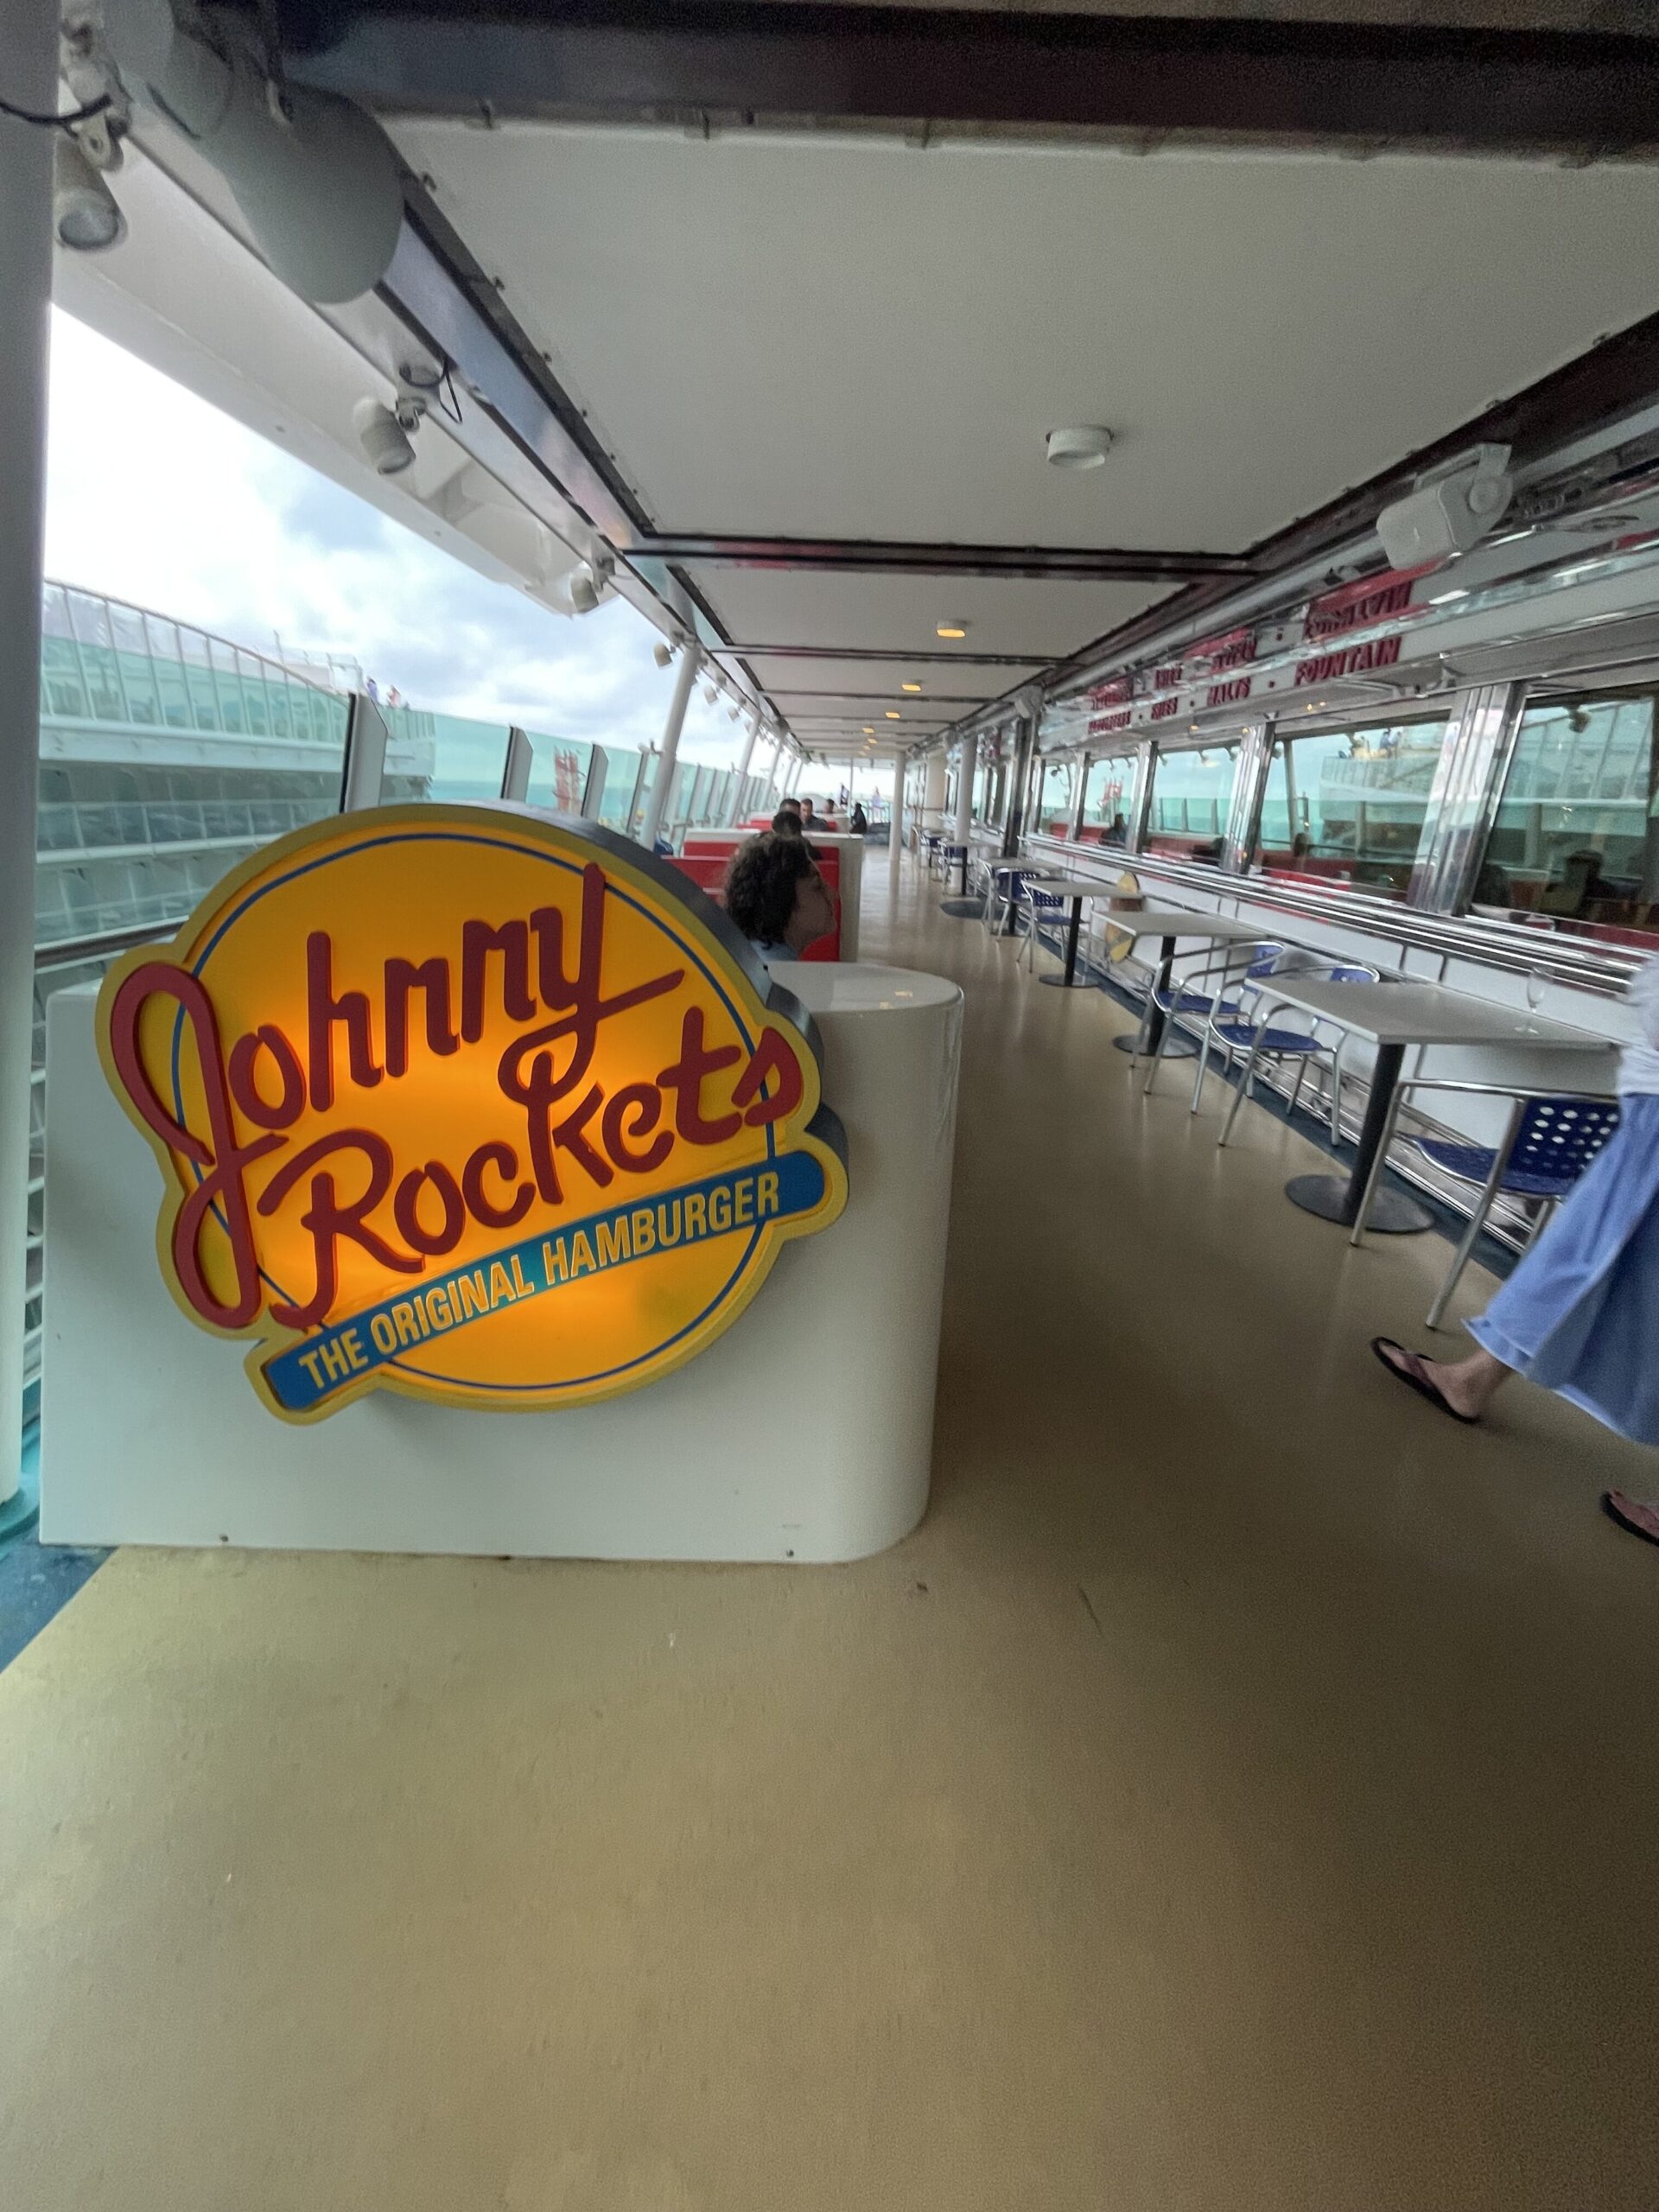 a restaurant sign on a cruise ship